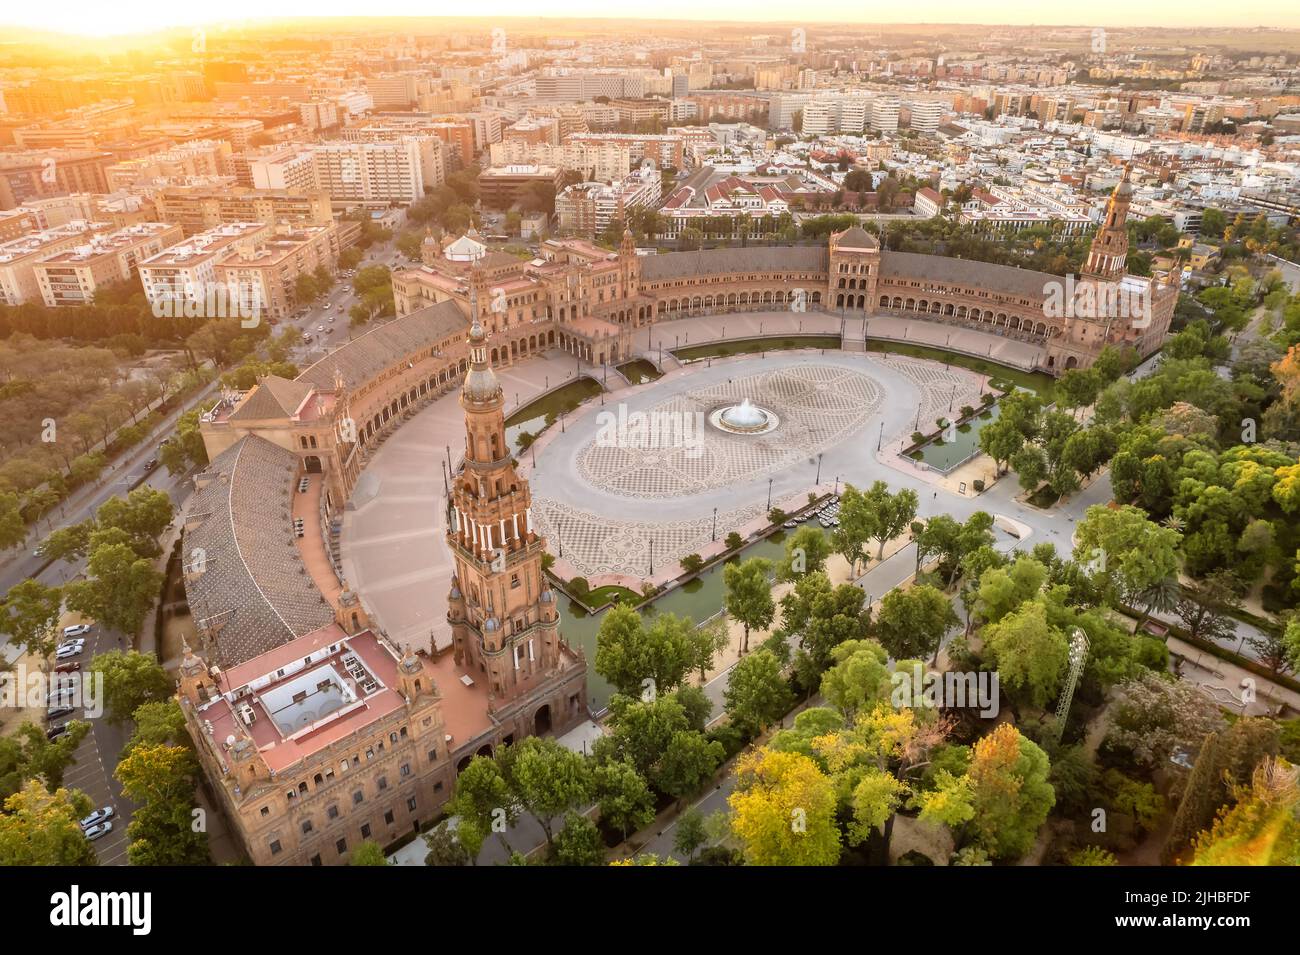 Plaza de Espana at sunrise in Seville, Spain. Aerial view Stock Photo